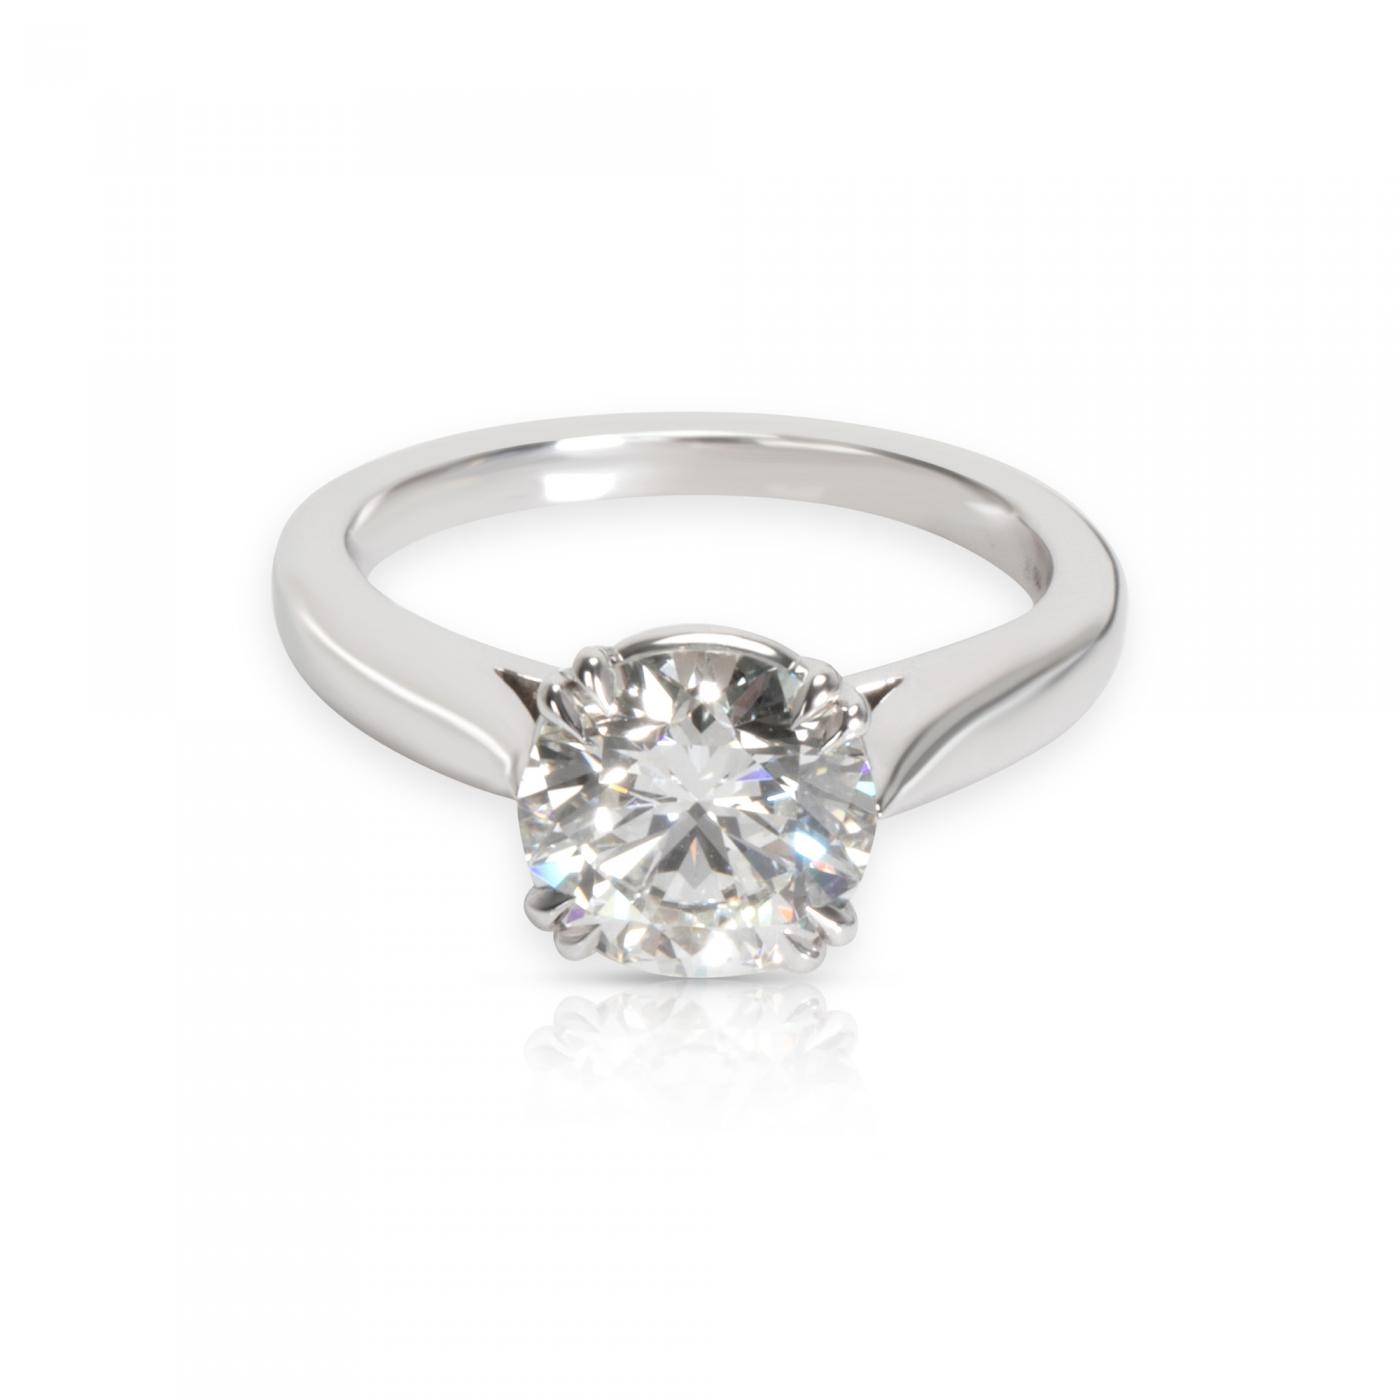 Harry Winston Harry Winston Diamond Engagement Ring In Platinum Gia Certified F Vs1 1 61 Ctw